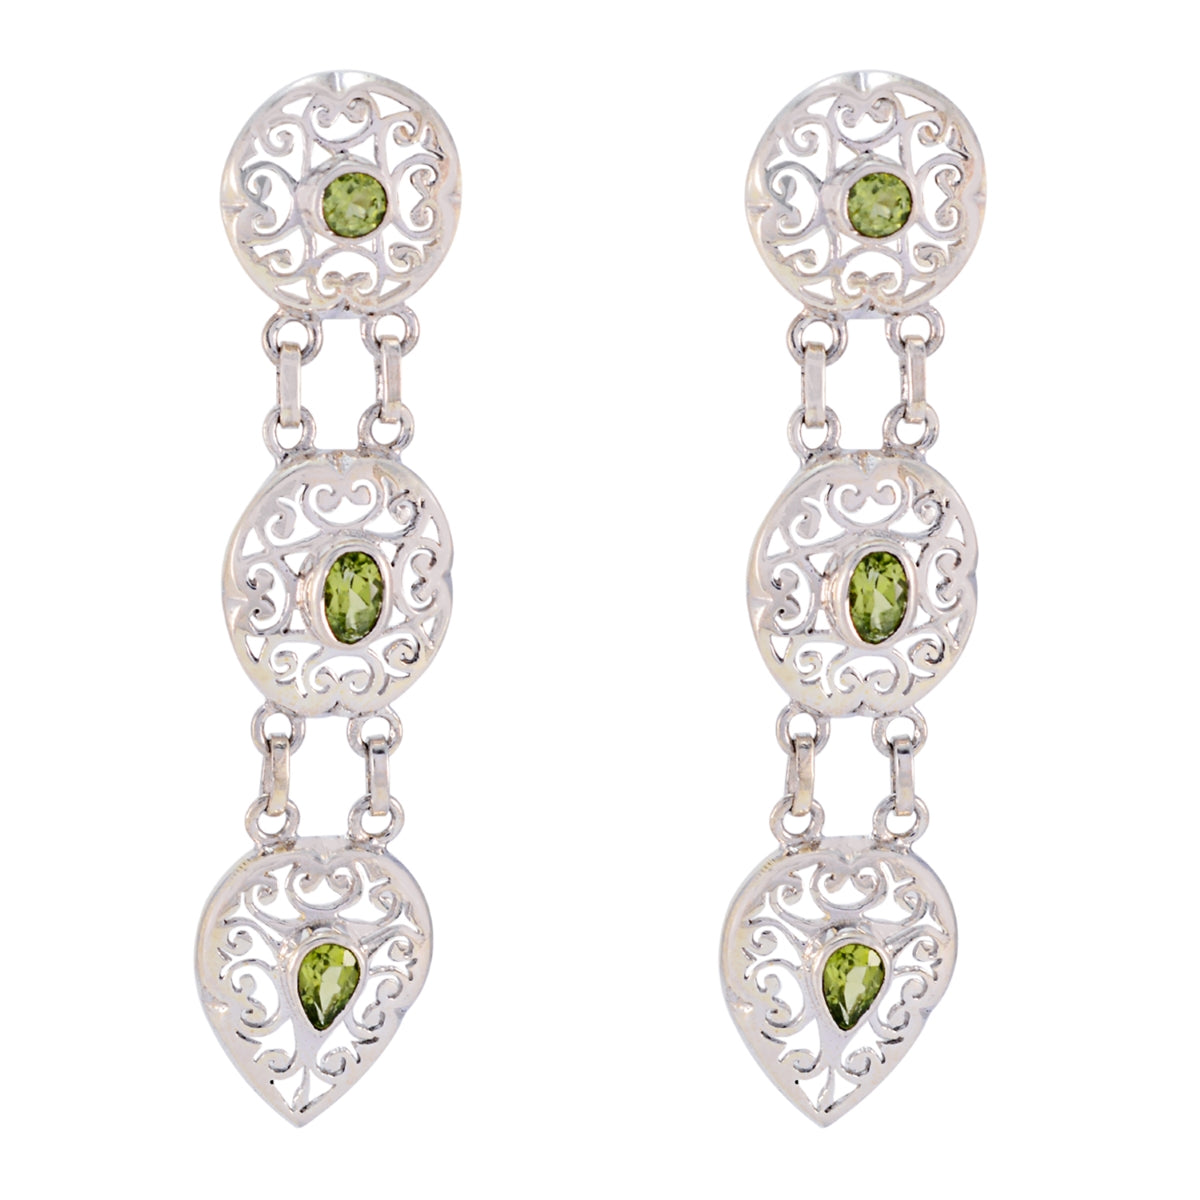 Riyo Nice Gemstone multi shape Faceted Green Peridot Silver Earring black Friday gift